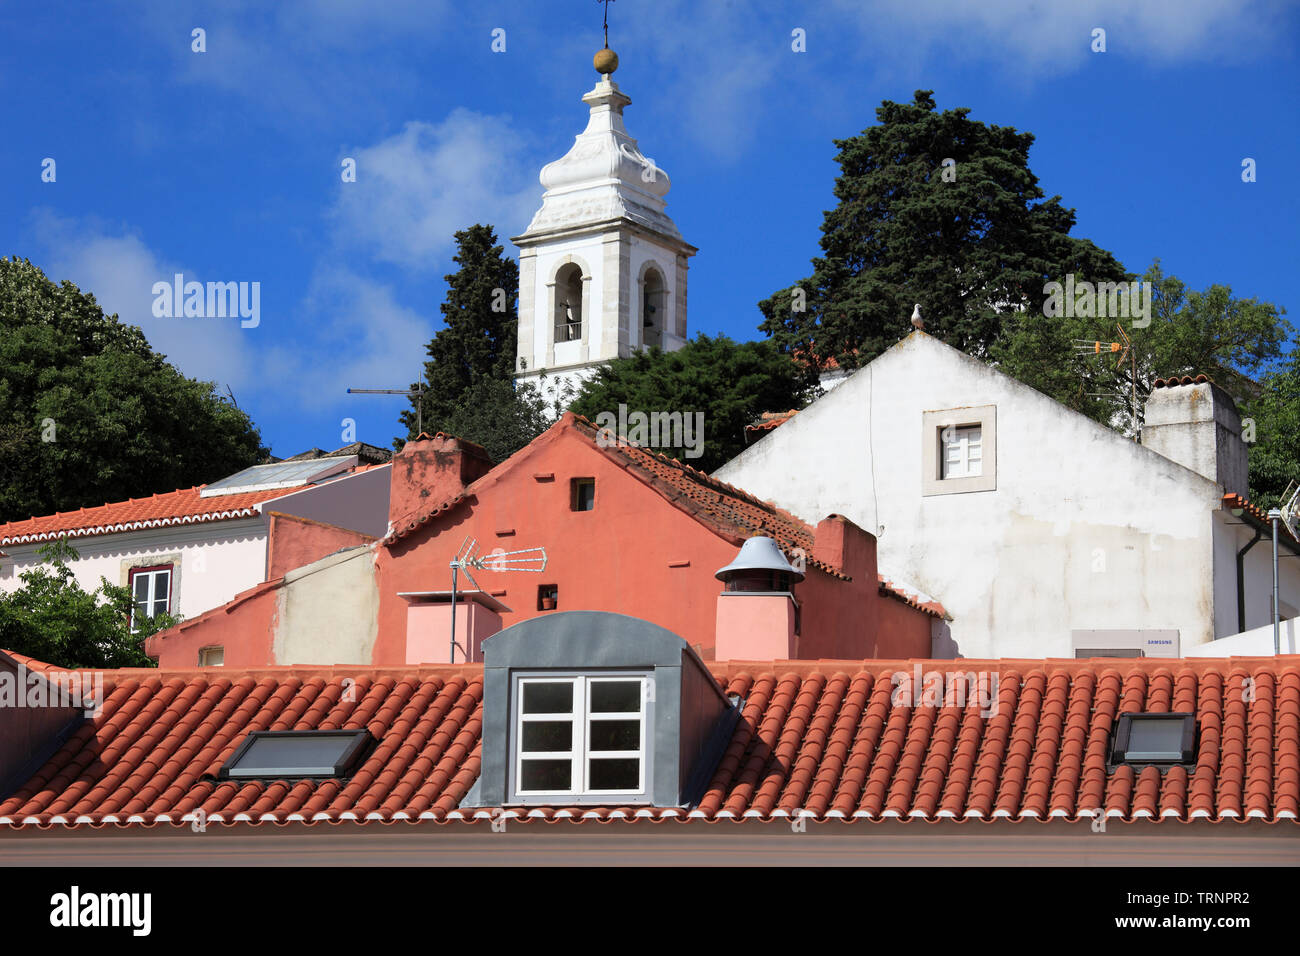 Portugal, Lisbon, Alfama, street scene, church, roofs, Stock Photo